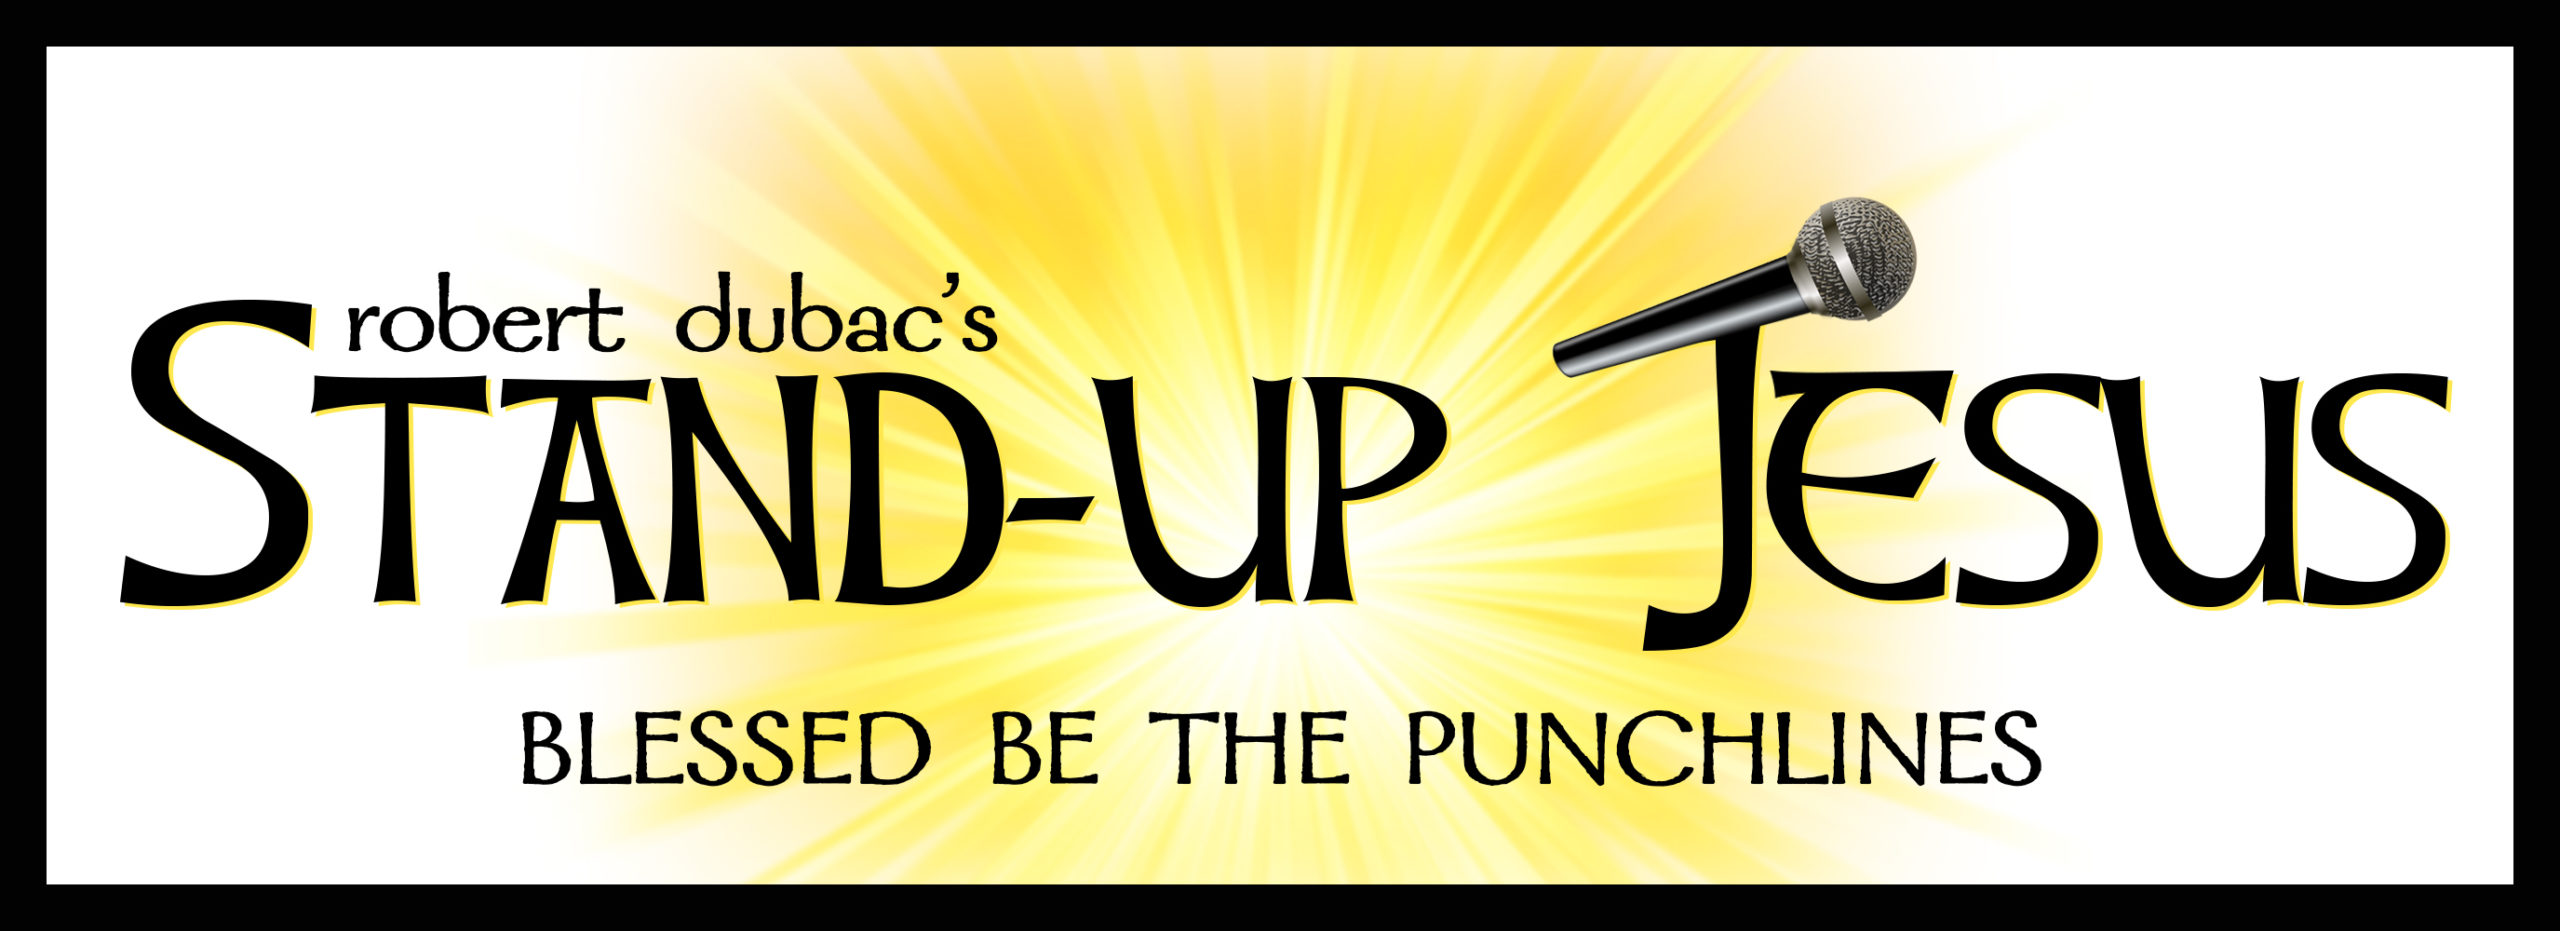 Robert Dubac's Stand Up Jesus Show Logo